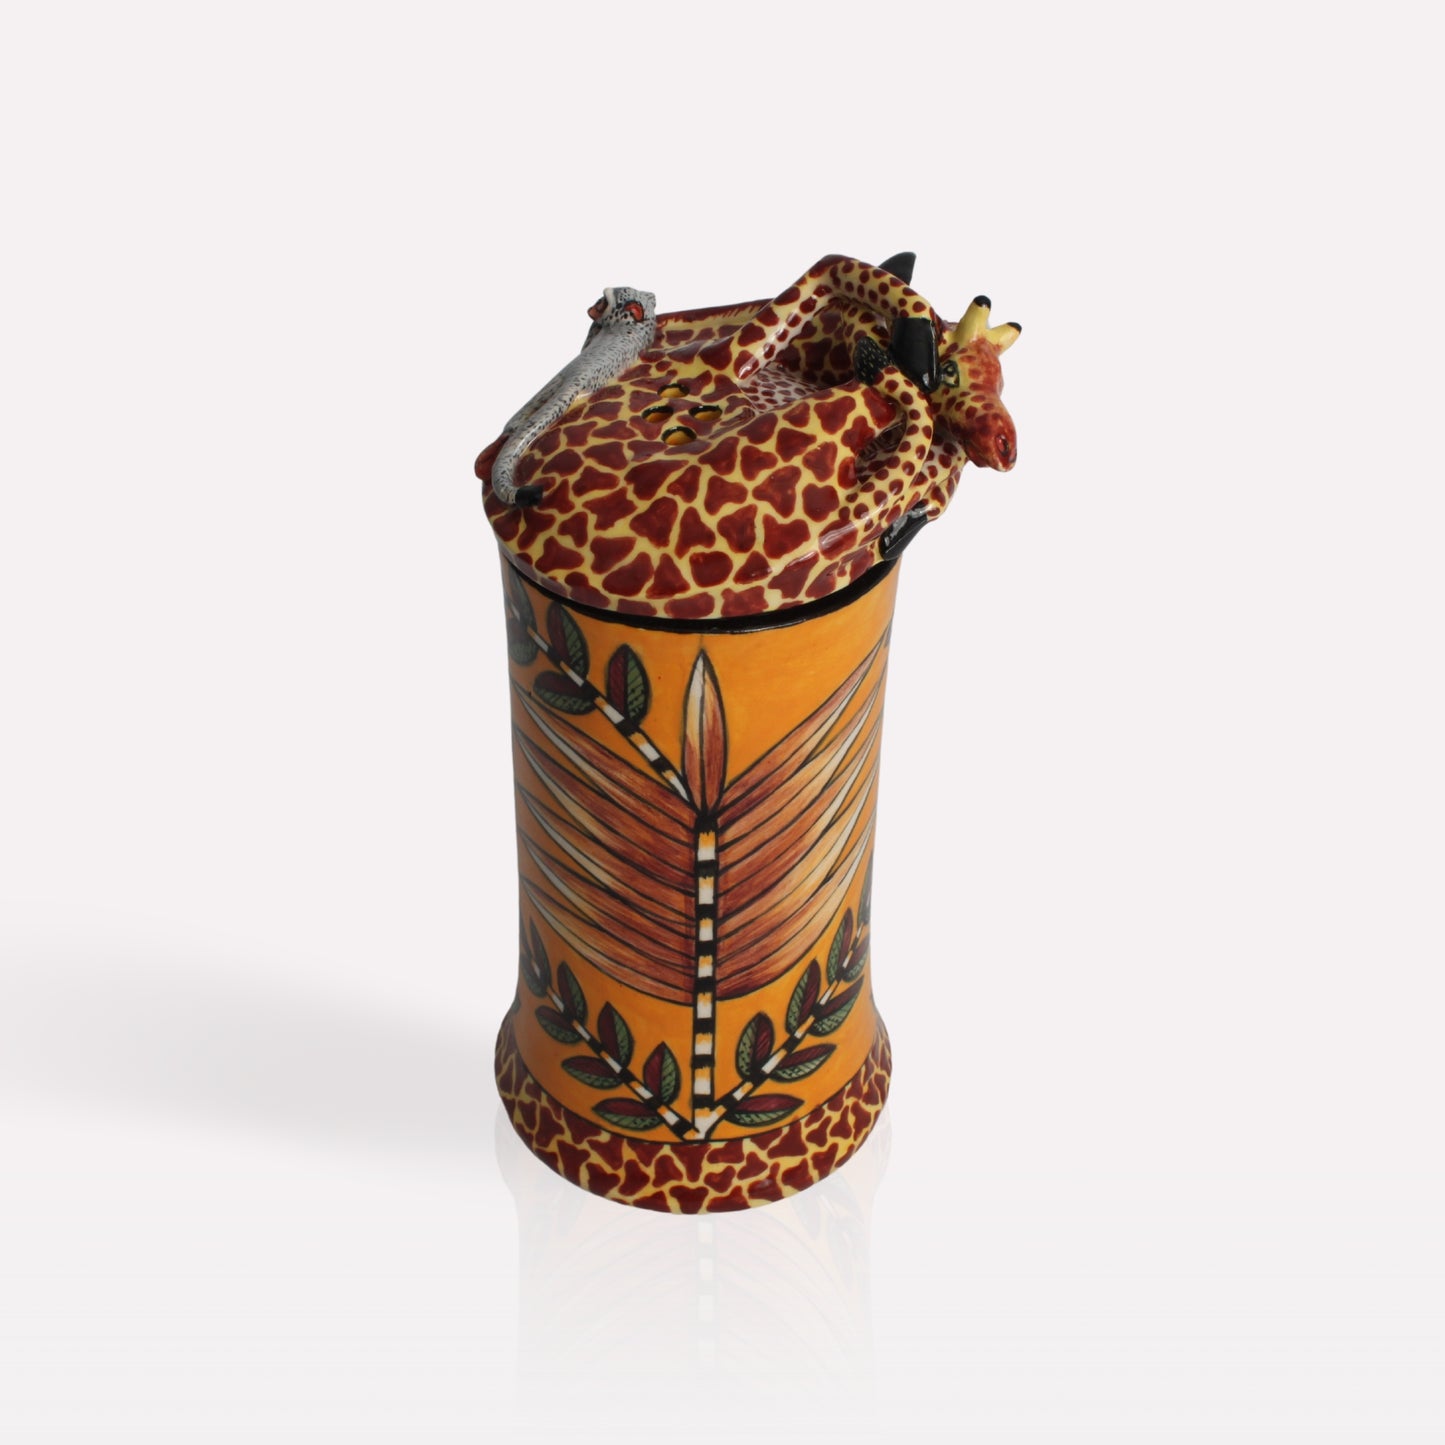 Giraffe and Monkey Diffuser Pot